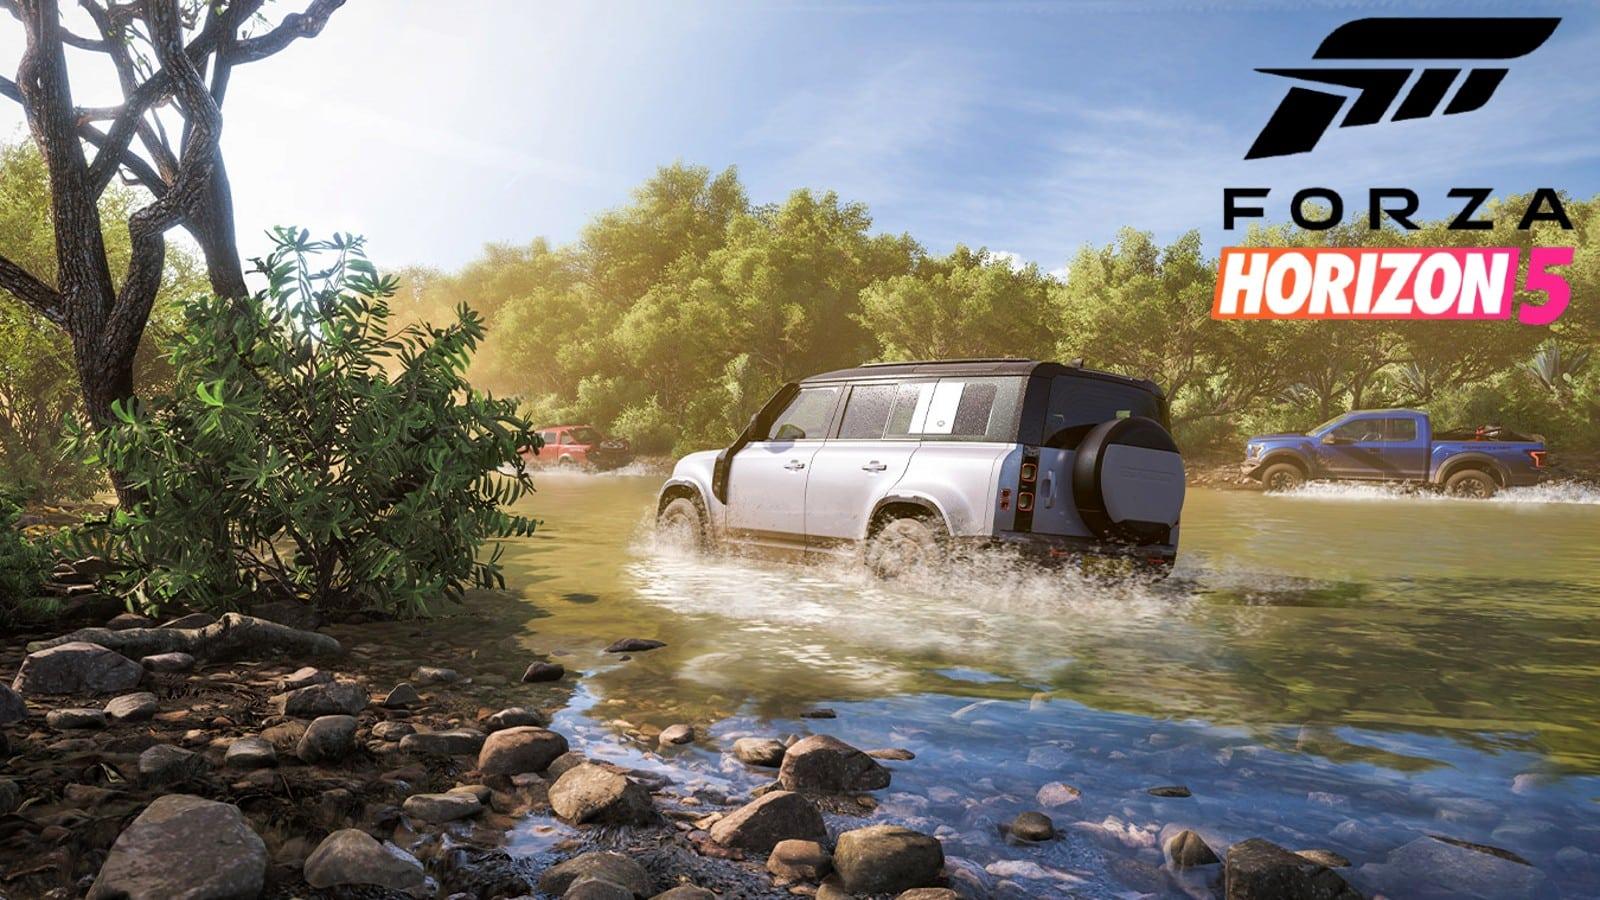 Forza Horizon 5 logo against screenshot of swampy lands